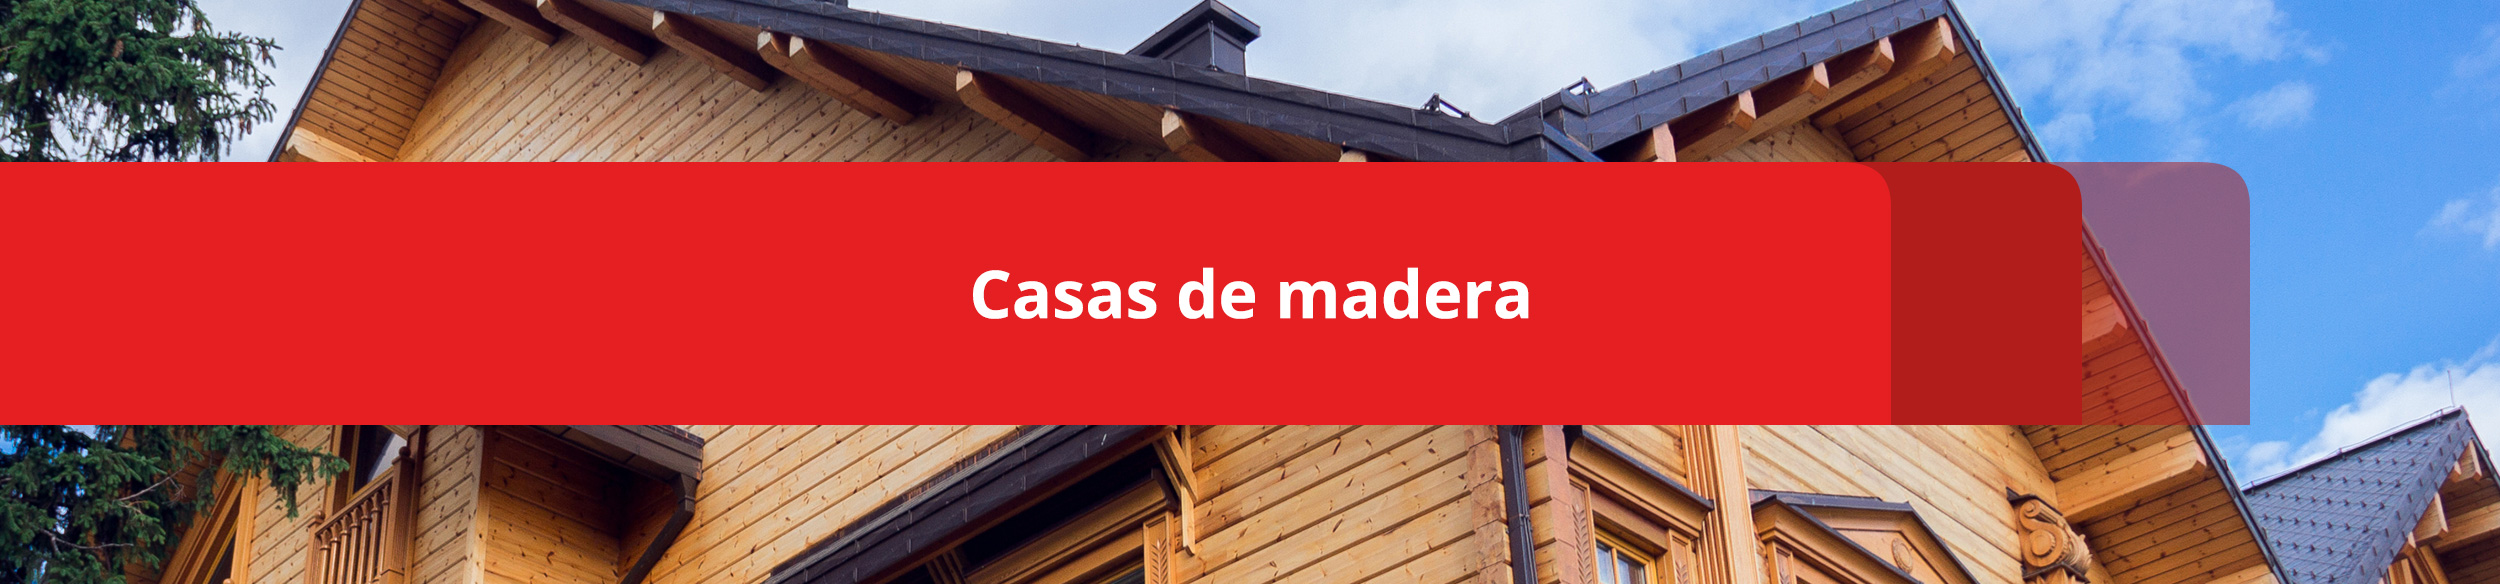 imagen principal casas de madera 2.web sc - Casas de Madera